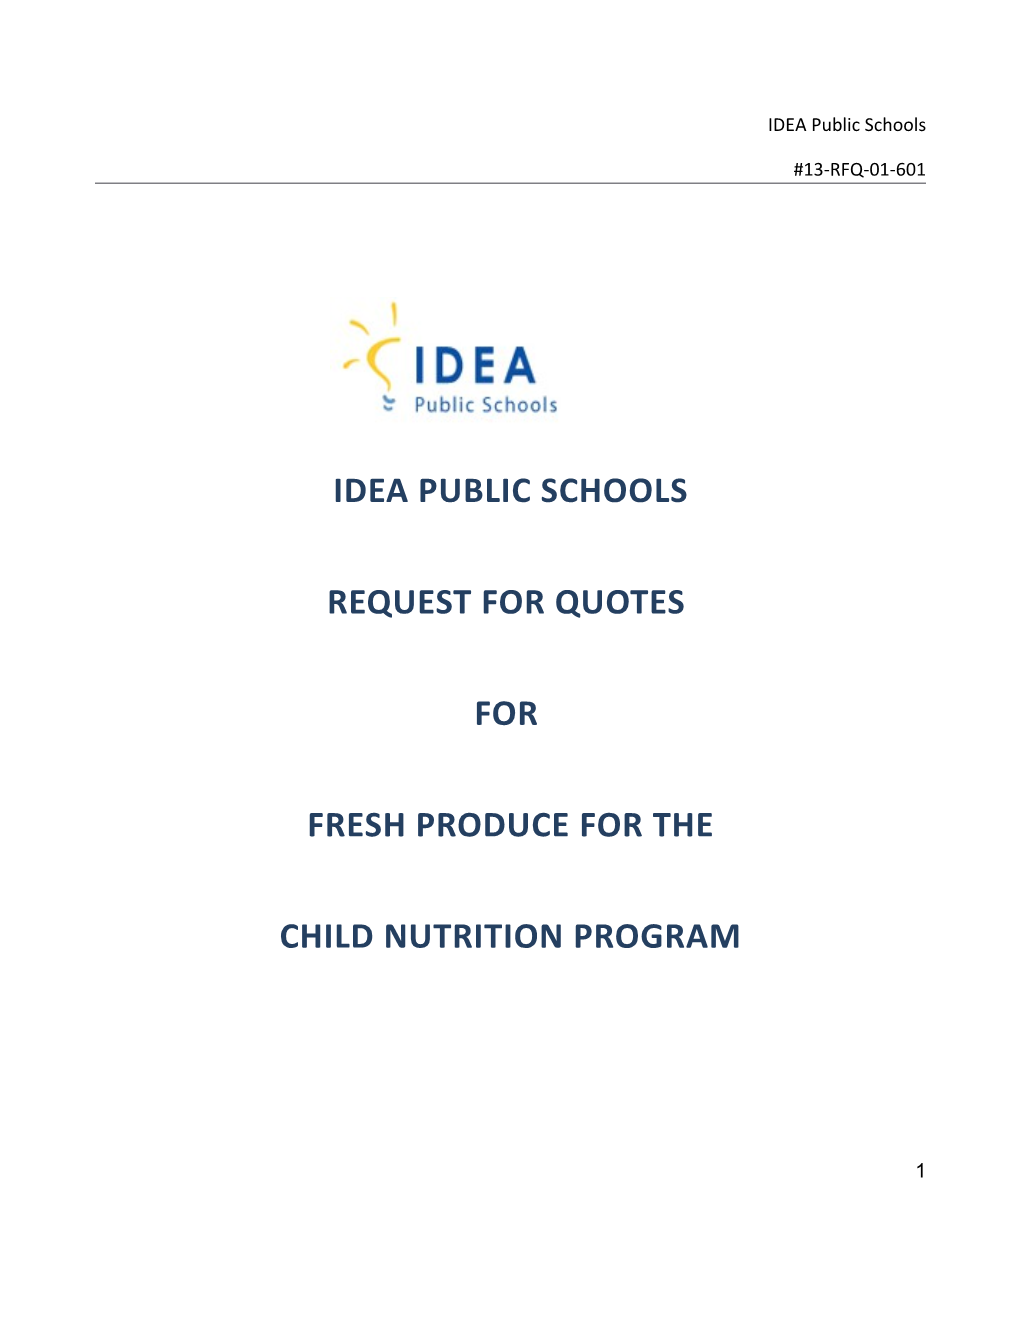 Ideapublic Schools